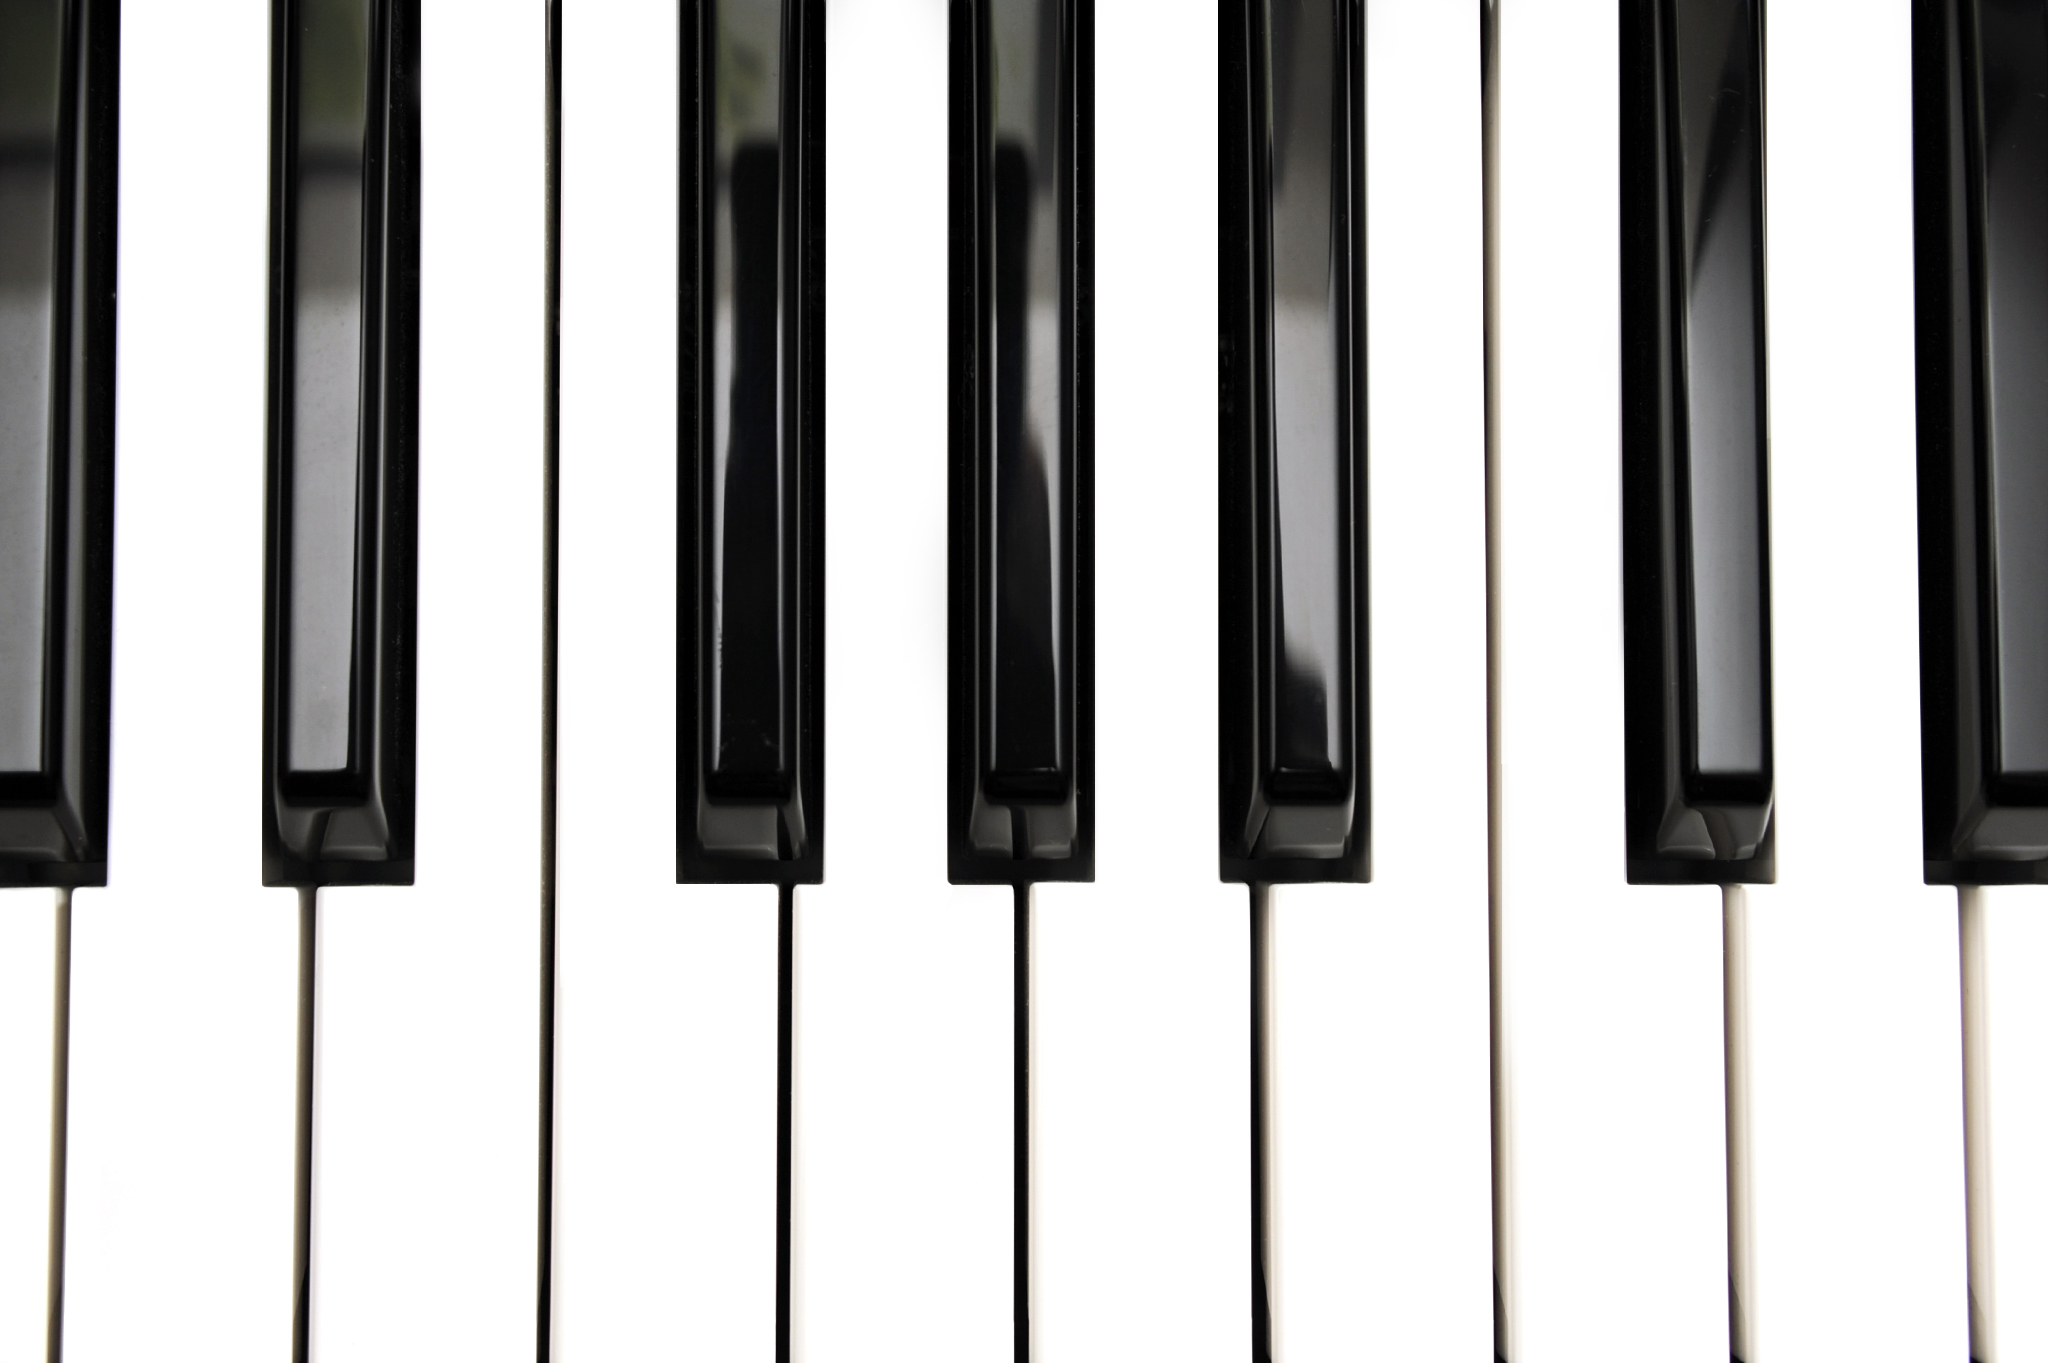 Digital piano keys.